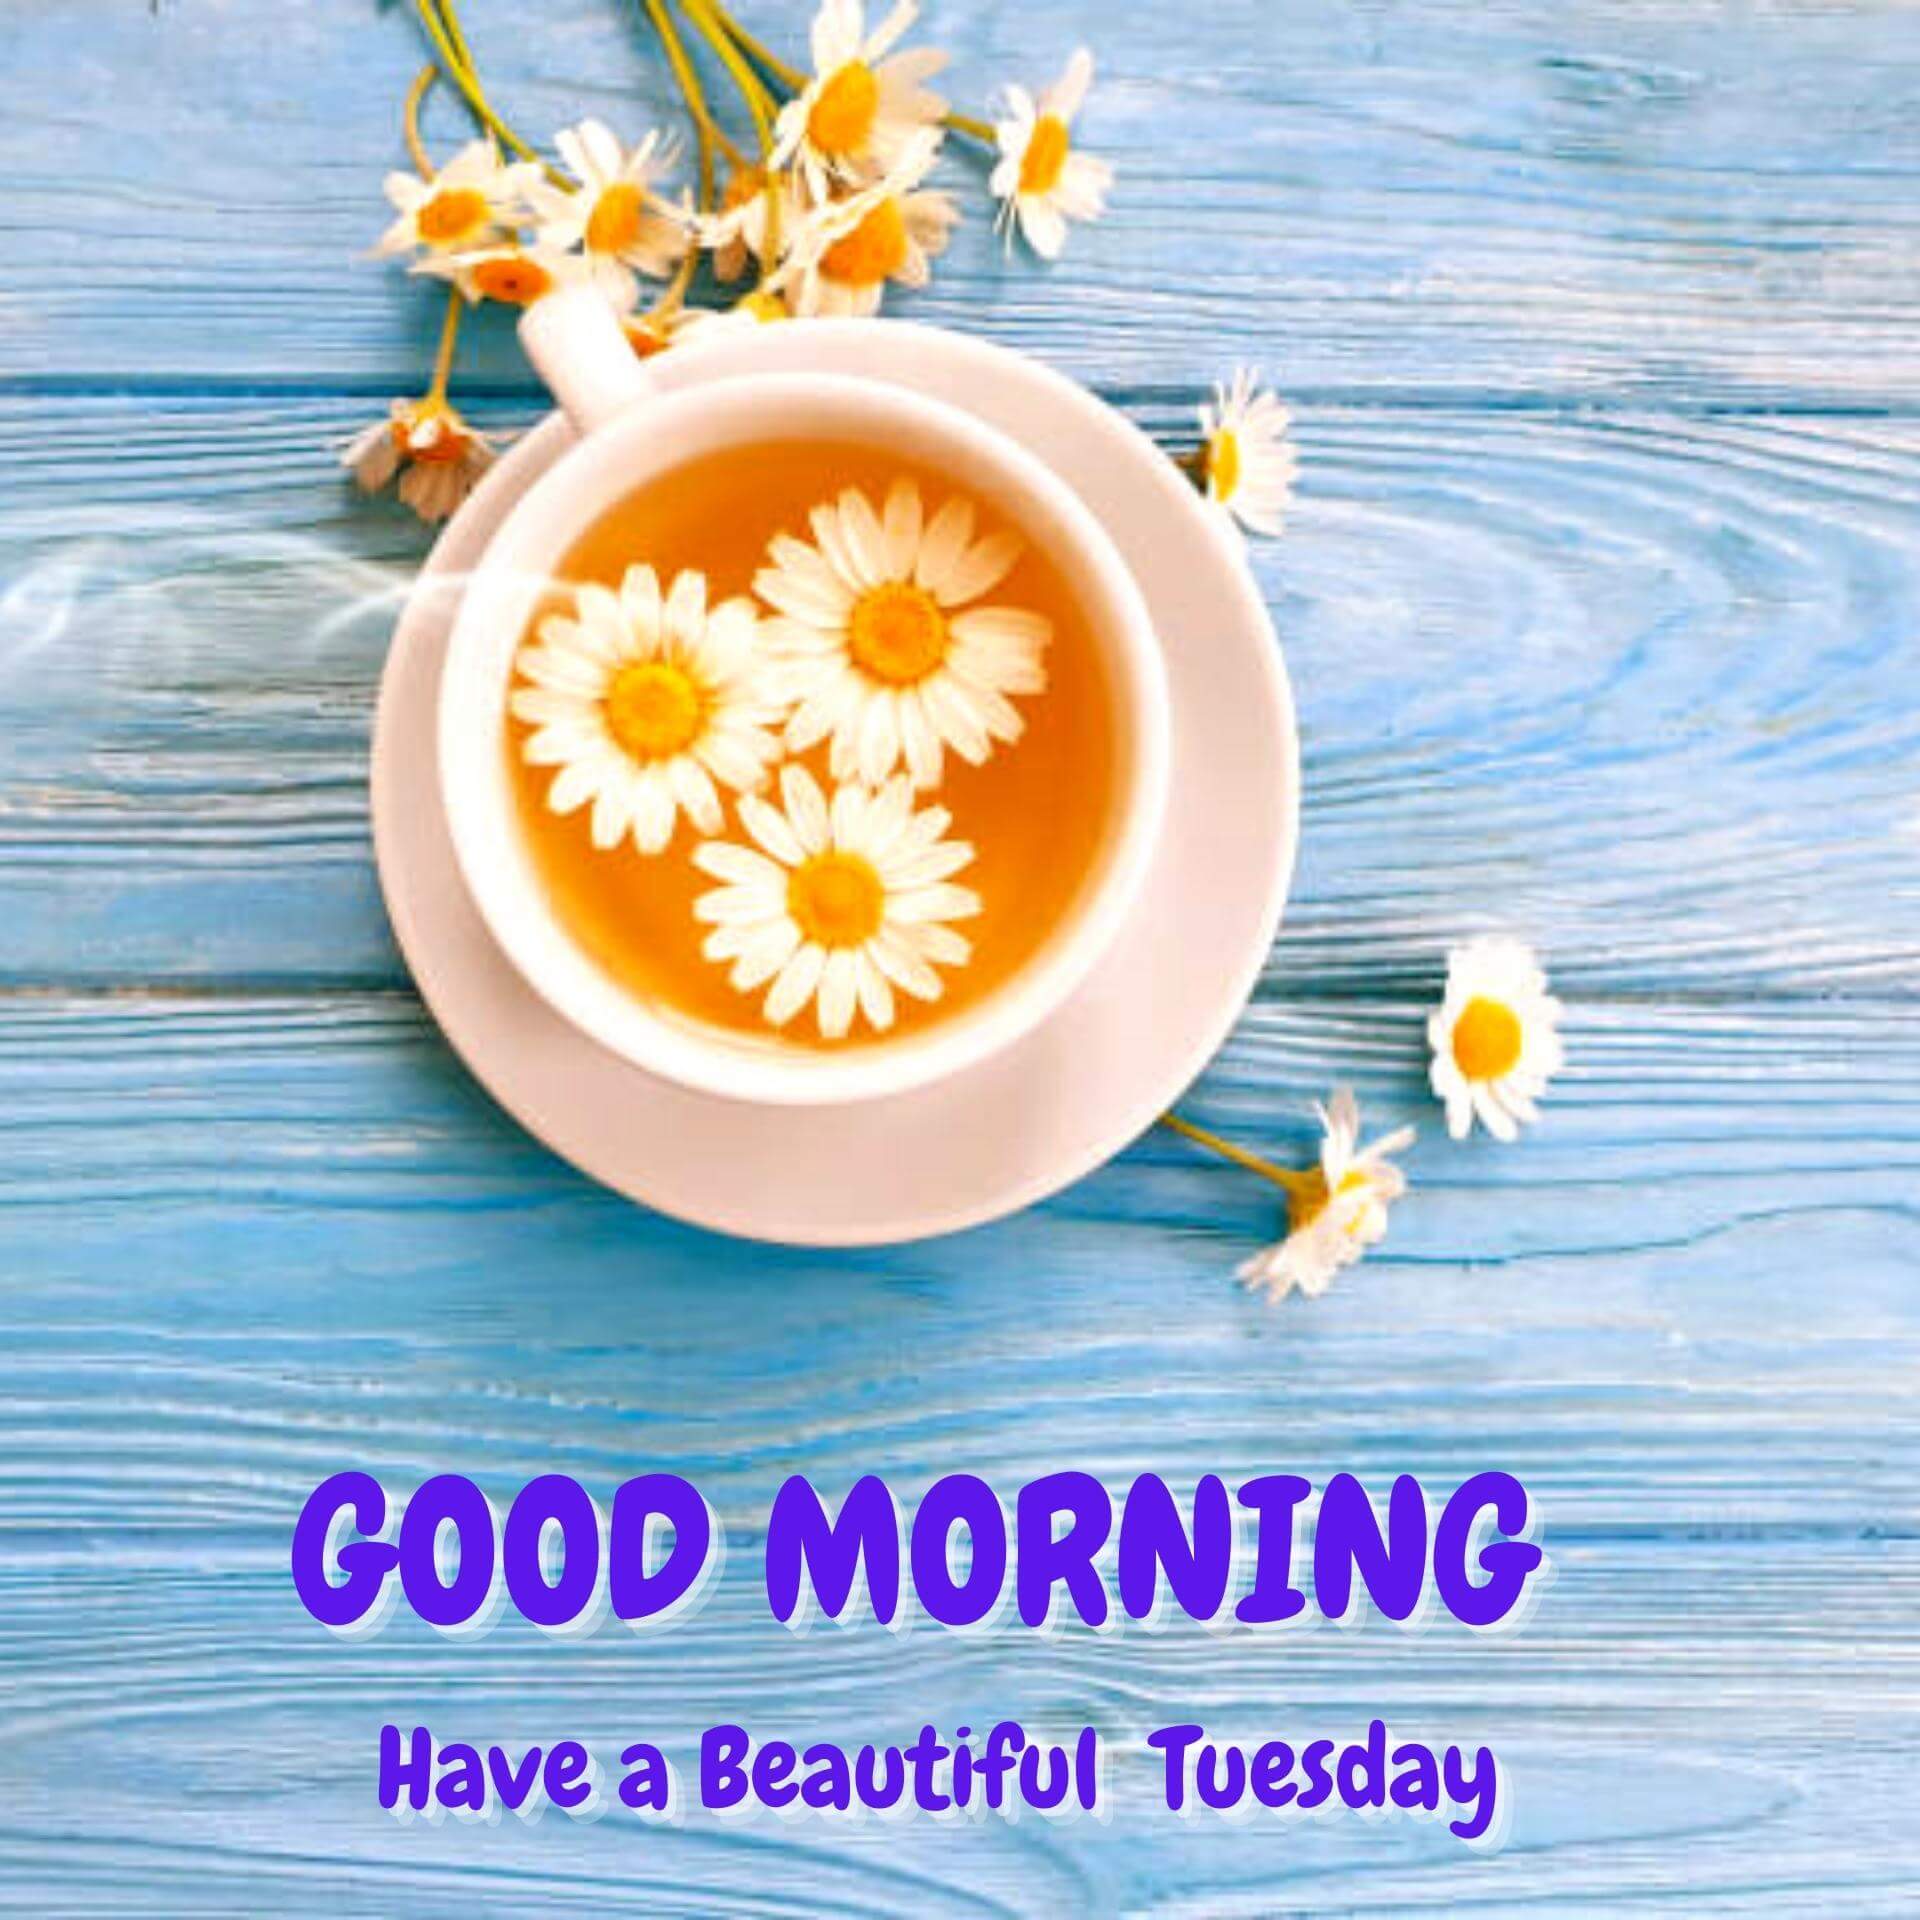 Tuesday good morning Wallpaper Pics With Tea